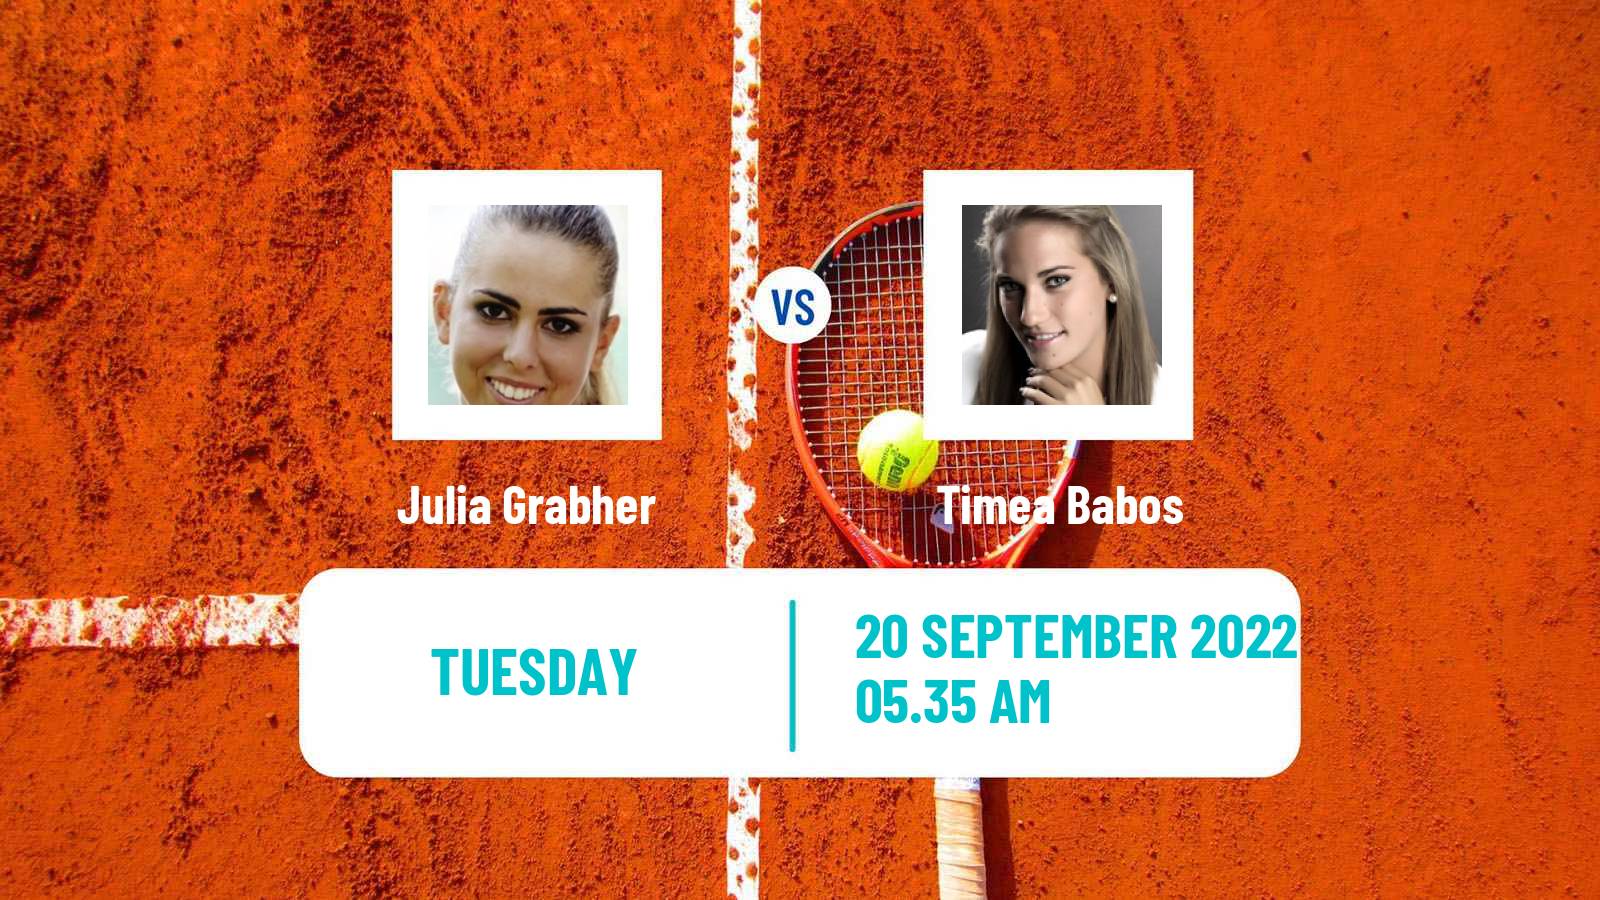 Tennis ATP Challenger Julia Grabher - Timea Babos